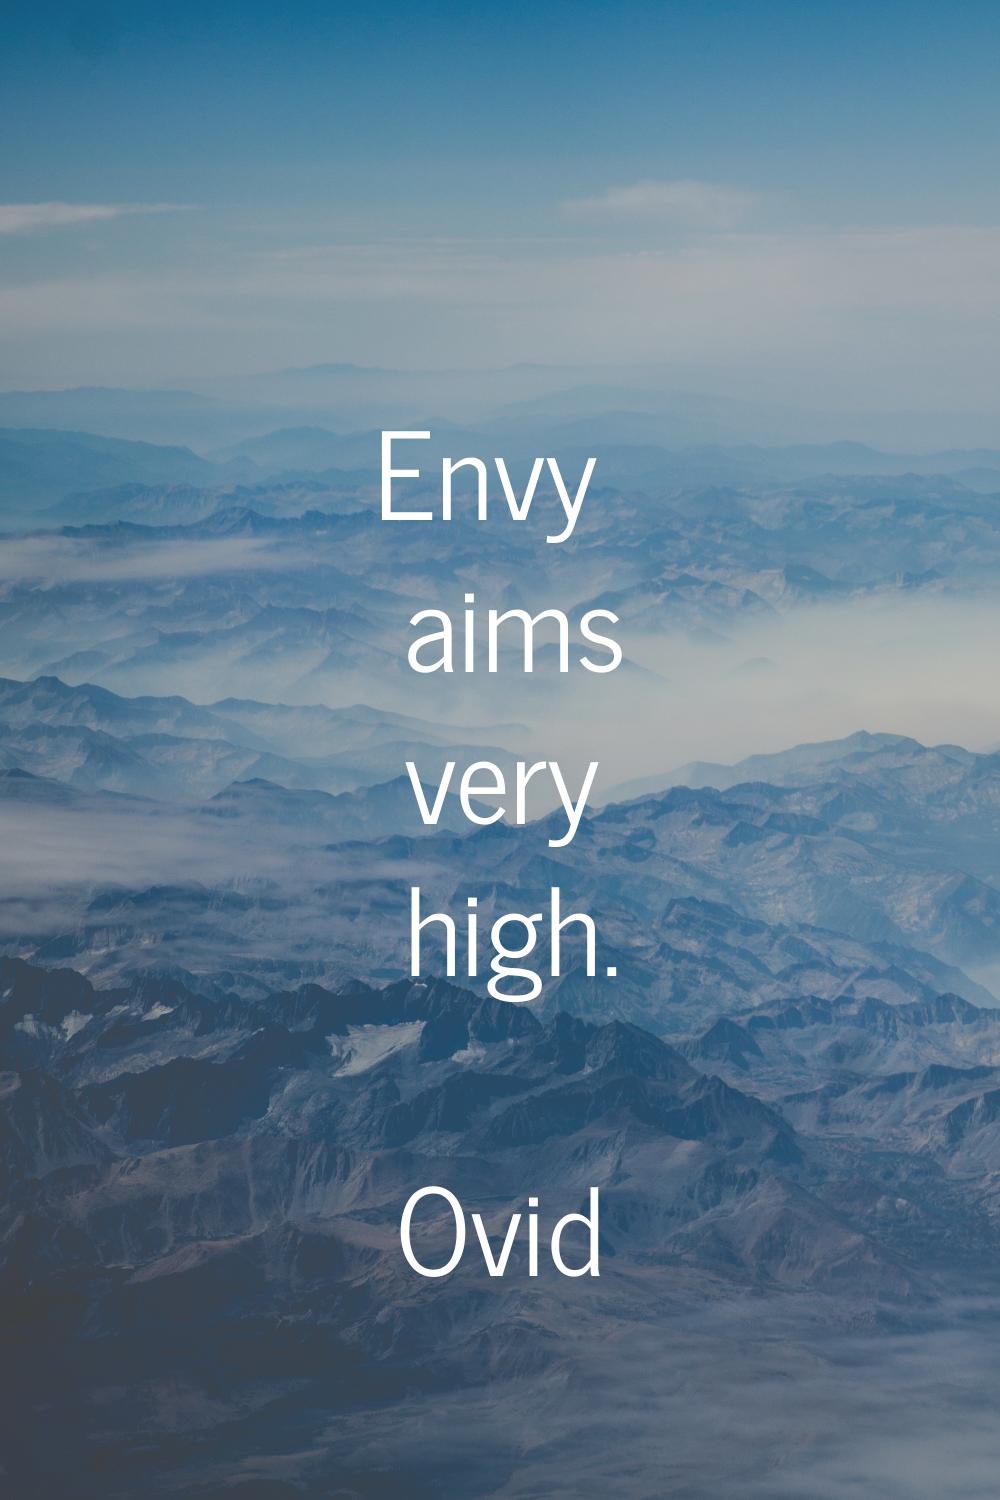 Envy aims very high.